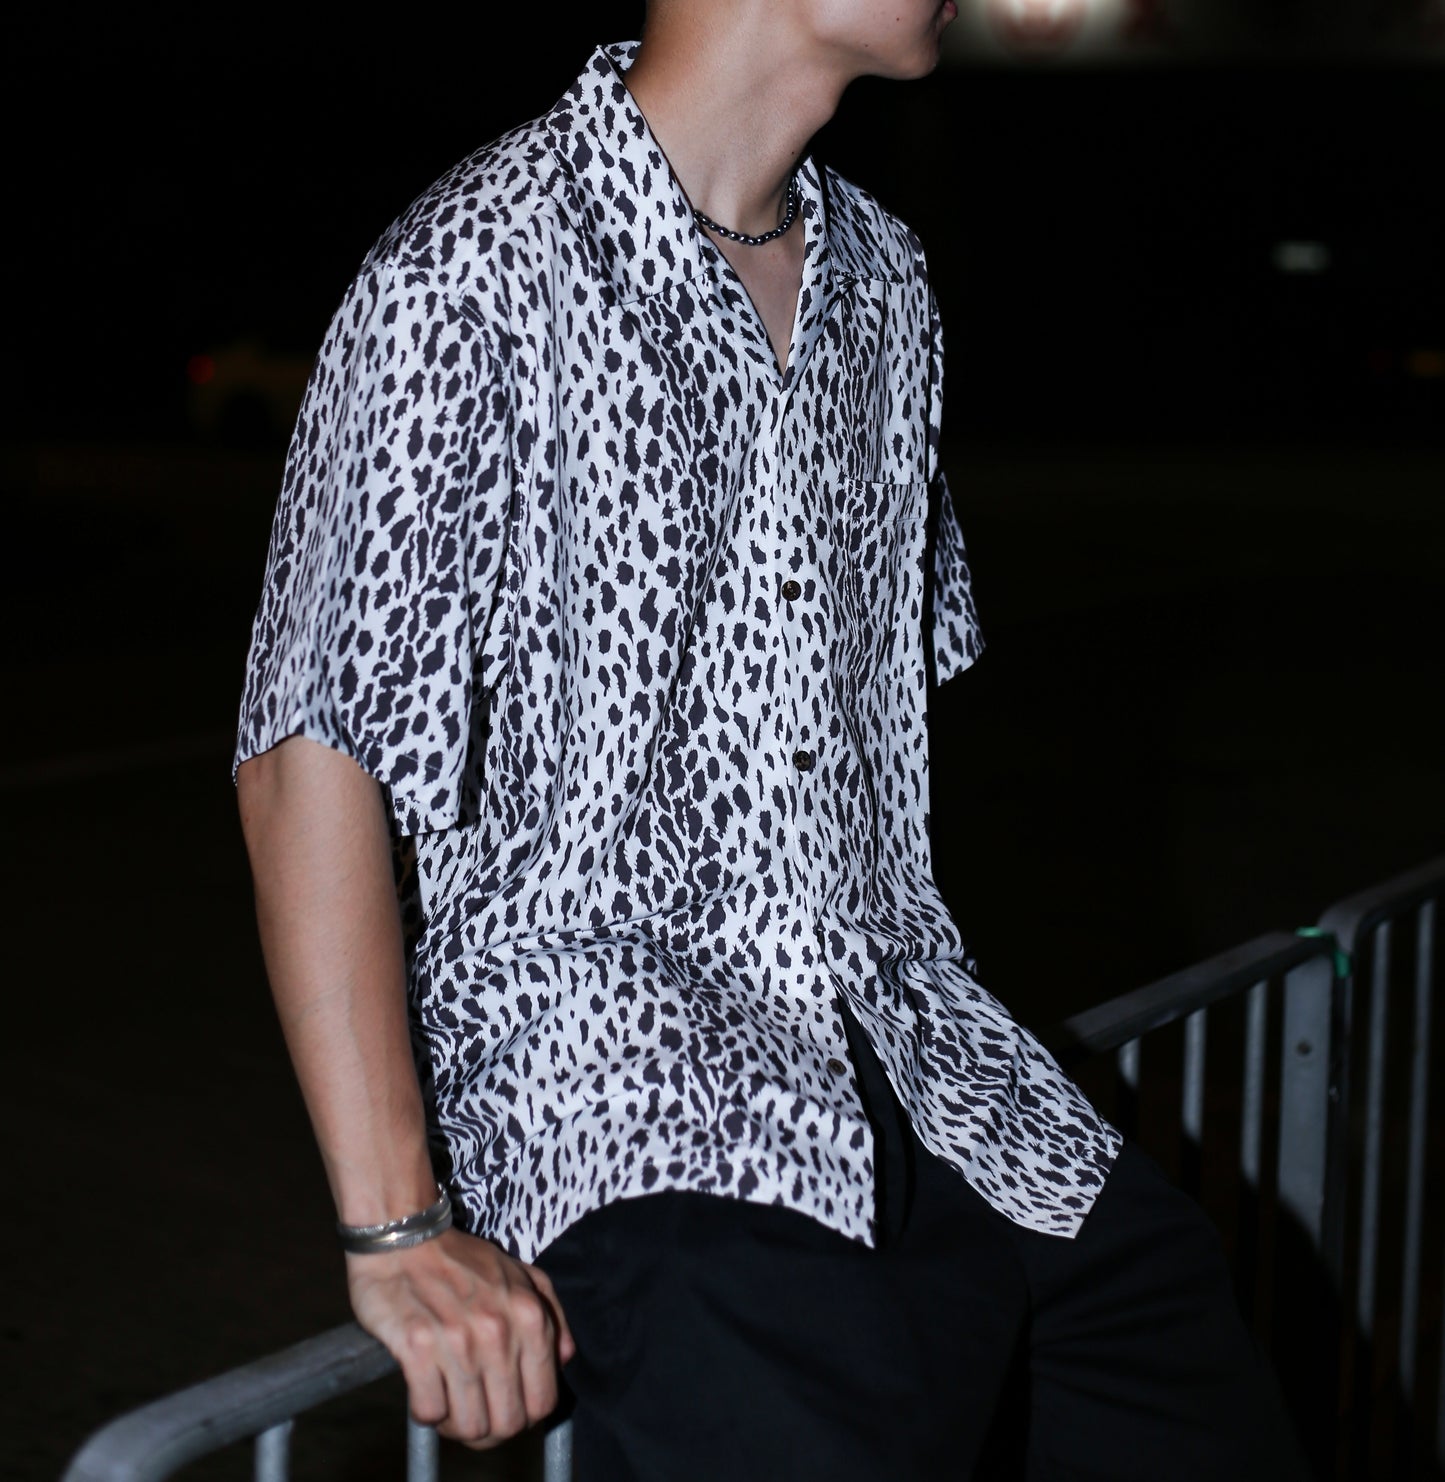 leopard printed shirt